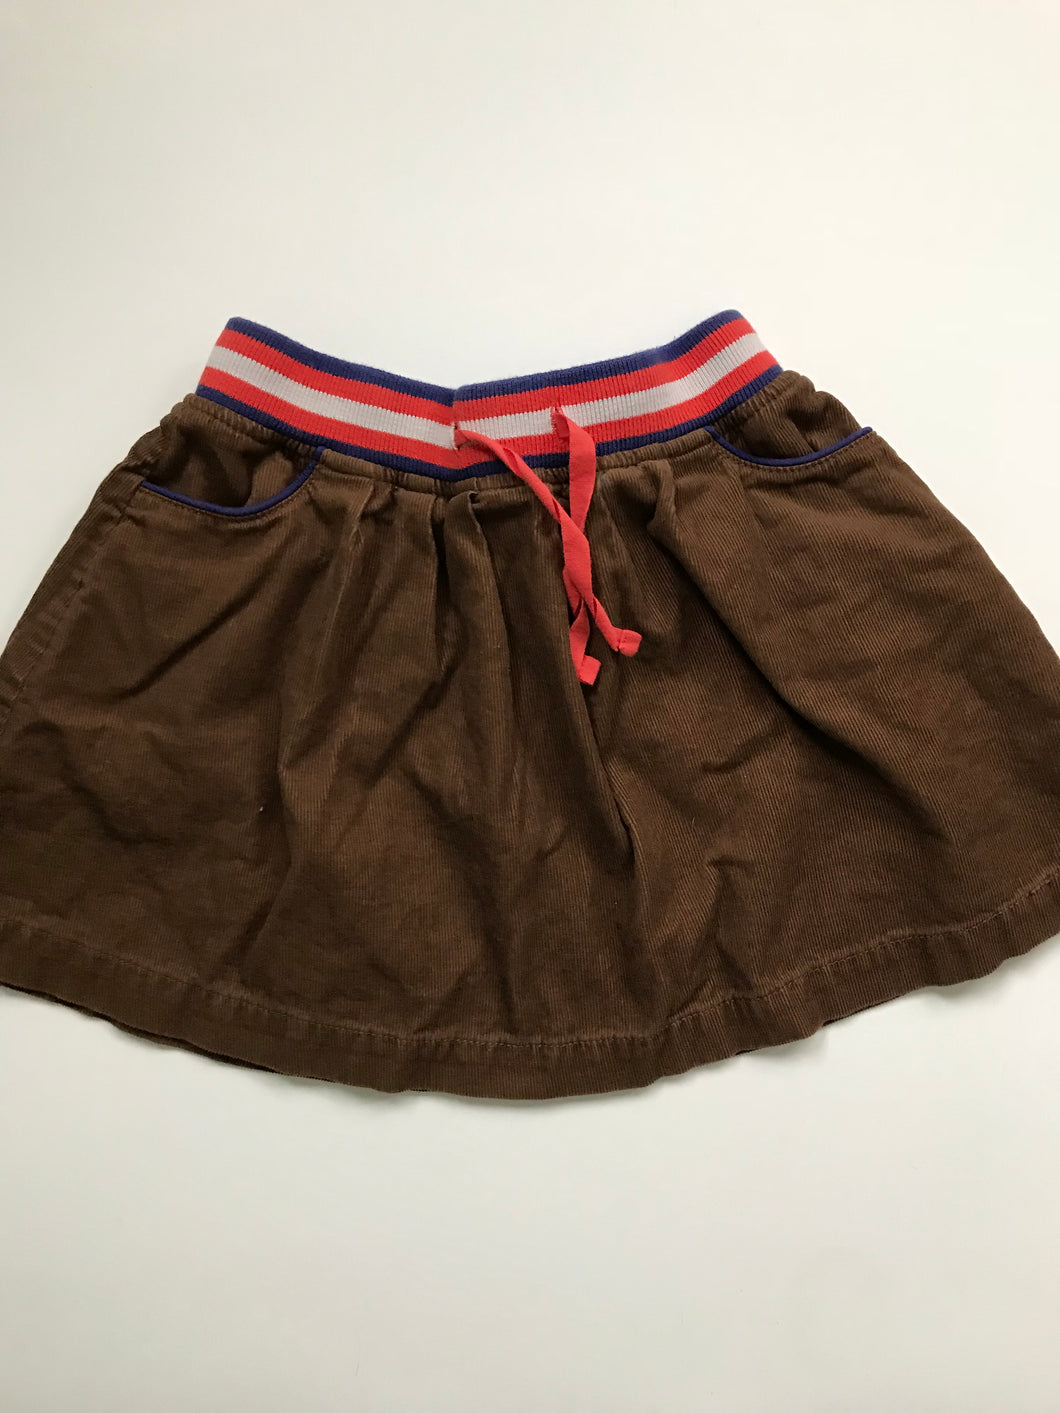 Mini Boden brown corduroy skirt 4